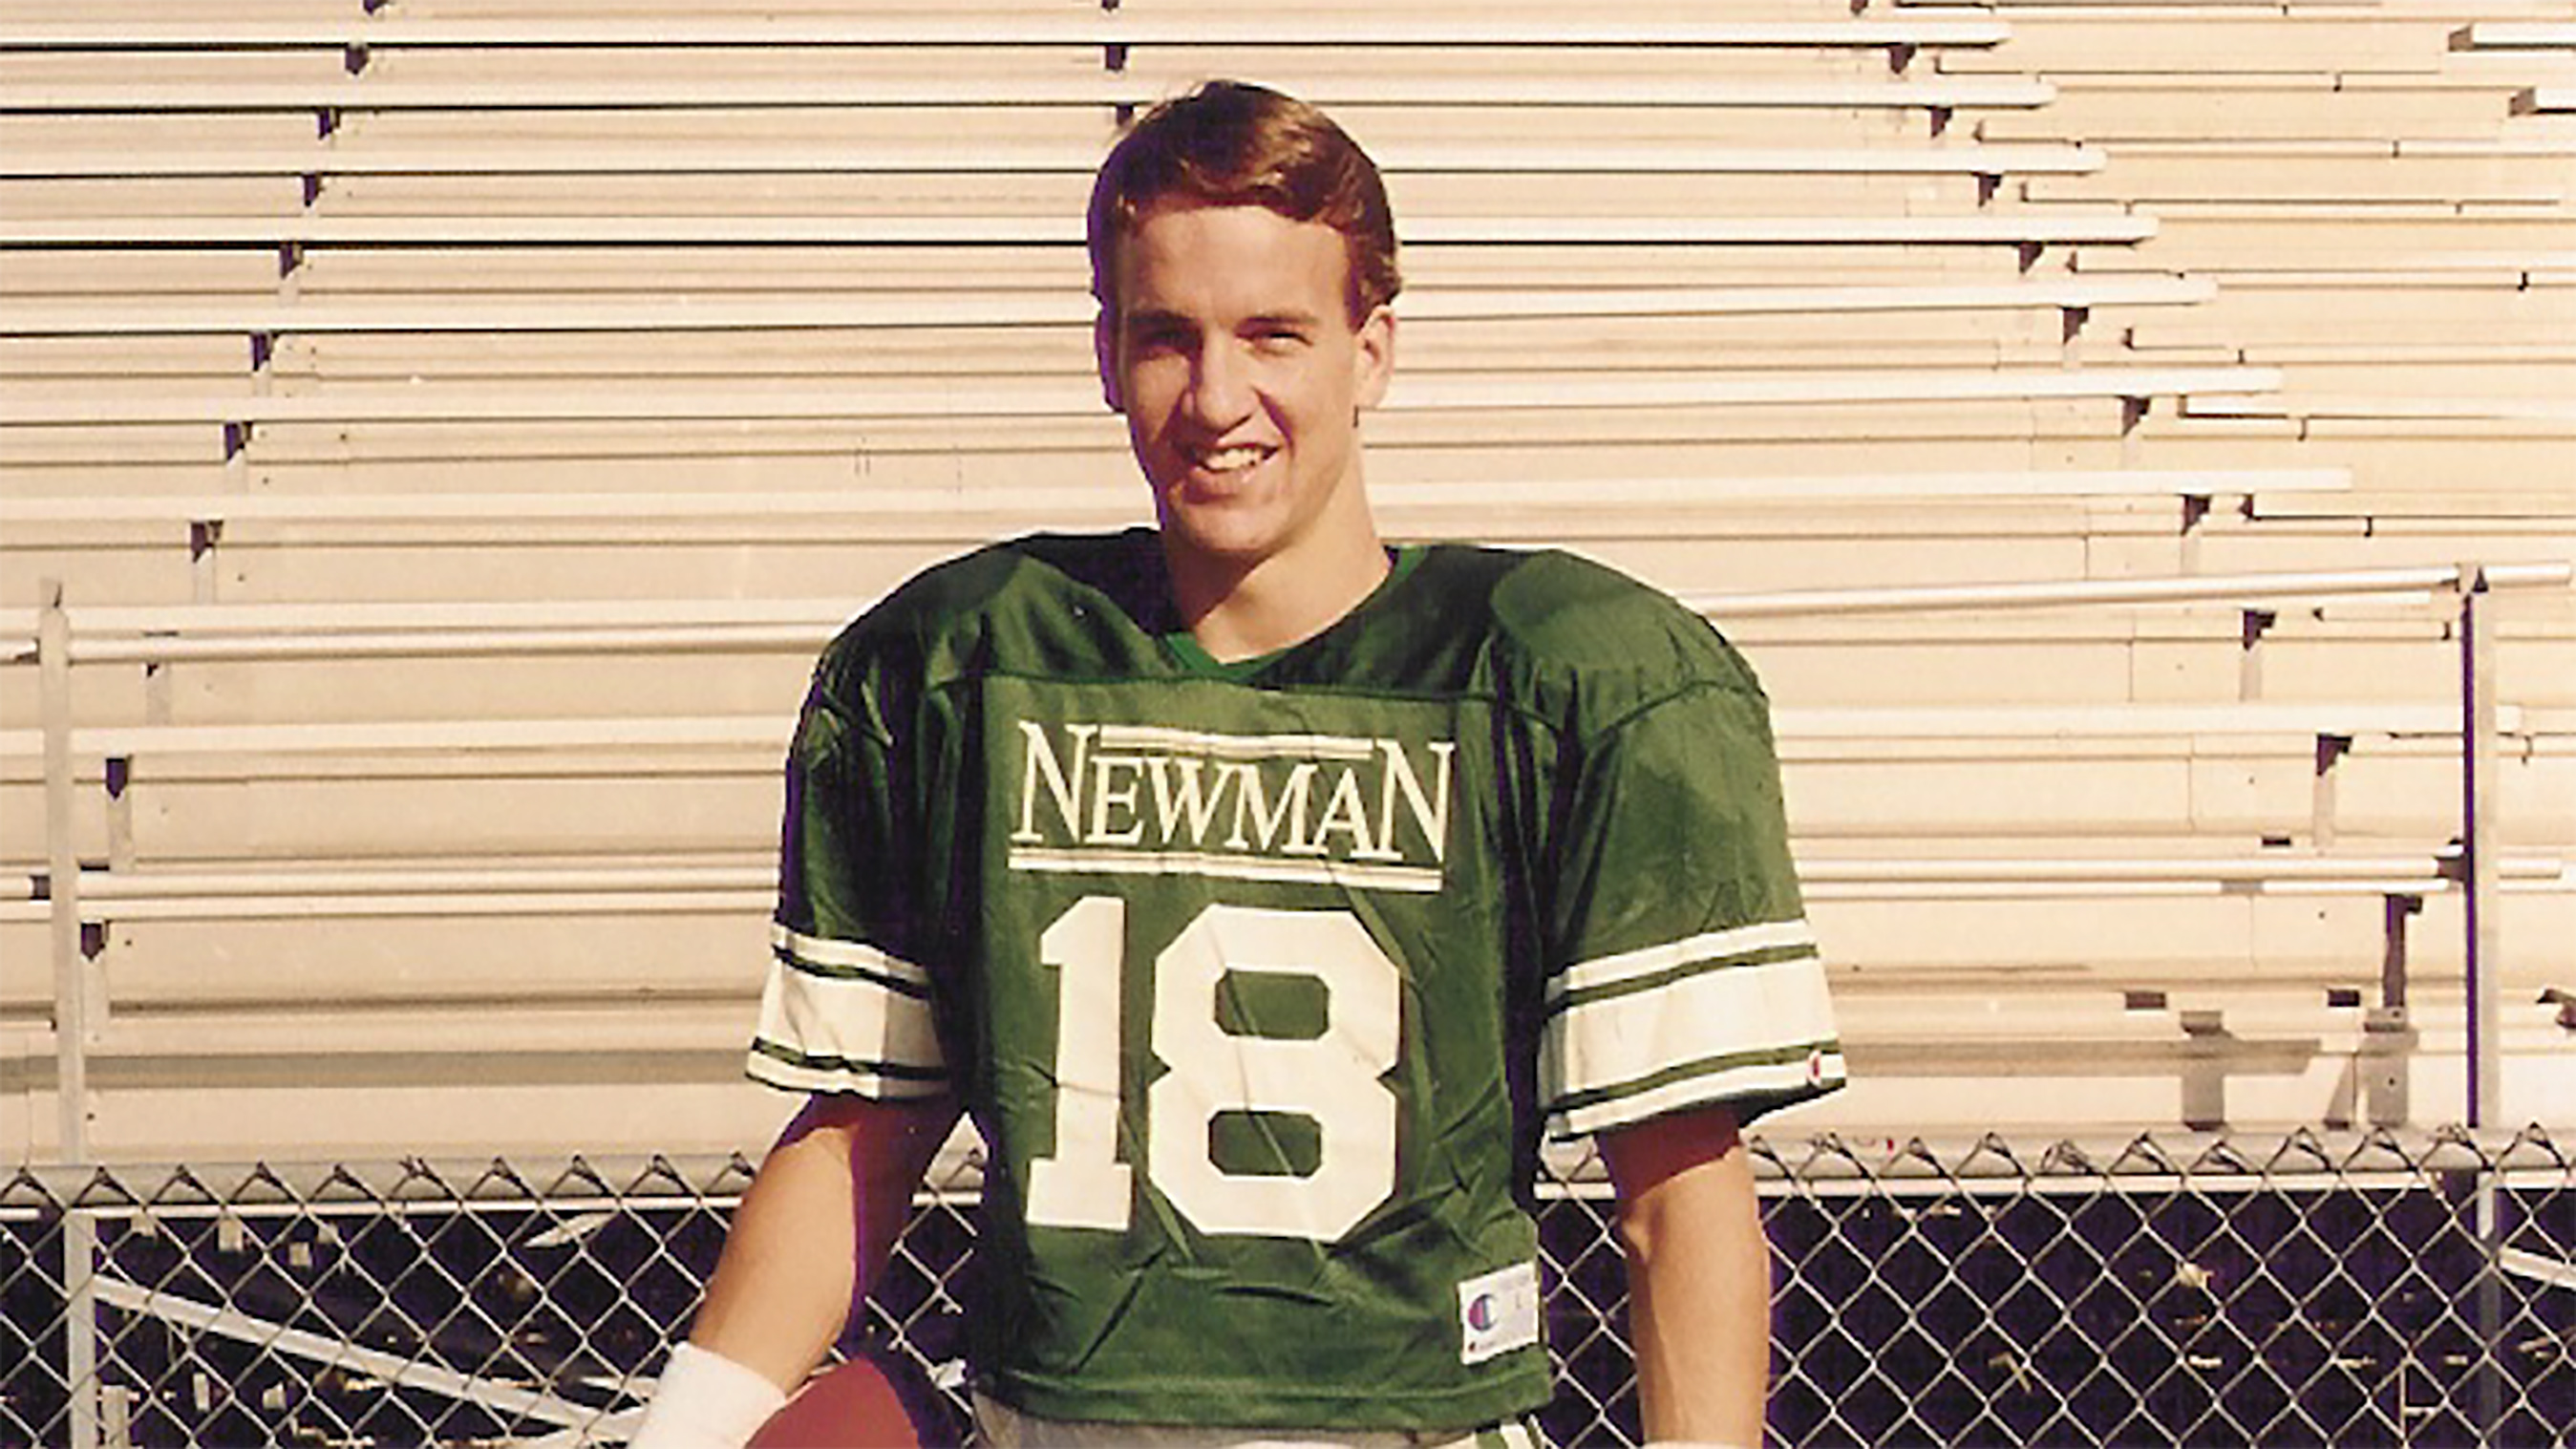 020416-NFL-Peyton-Manning-High-School.jpg